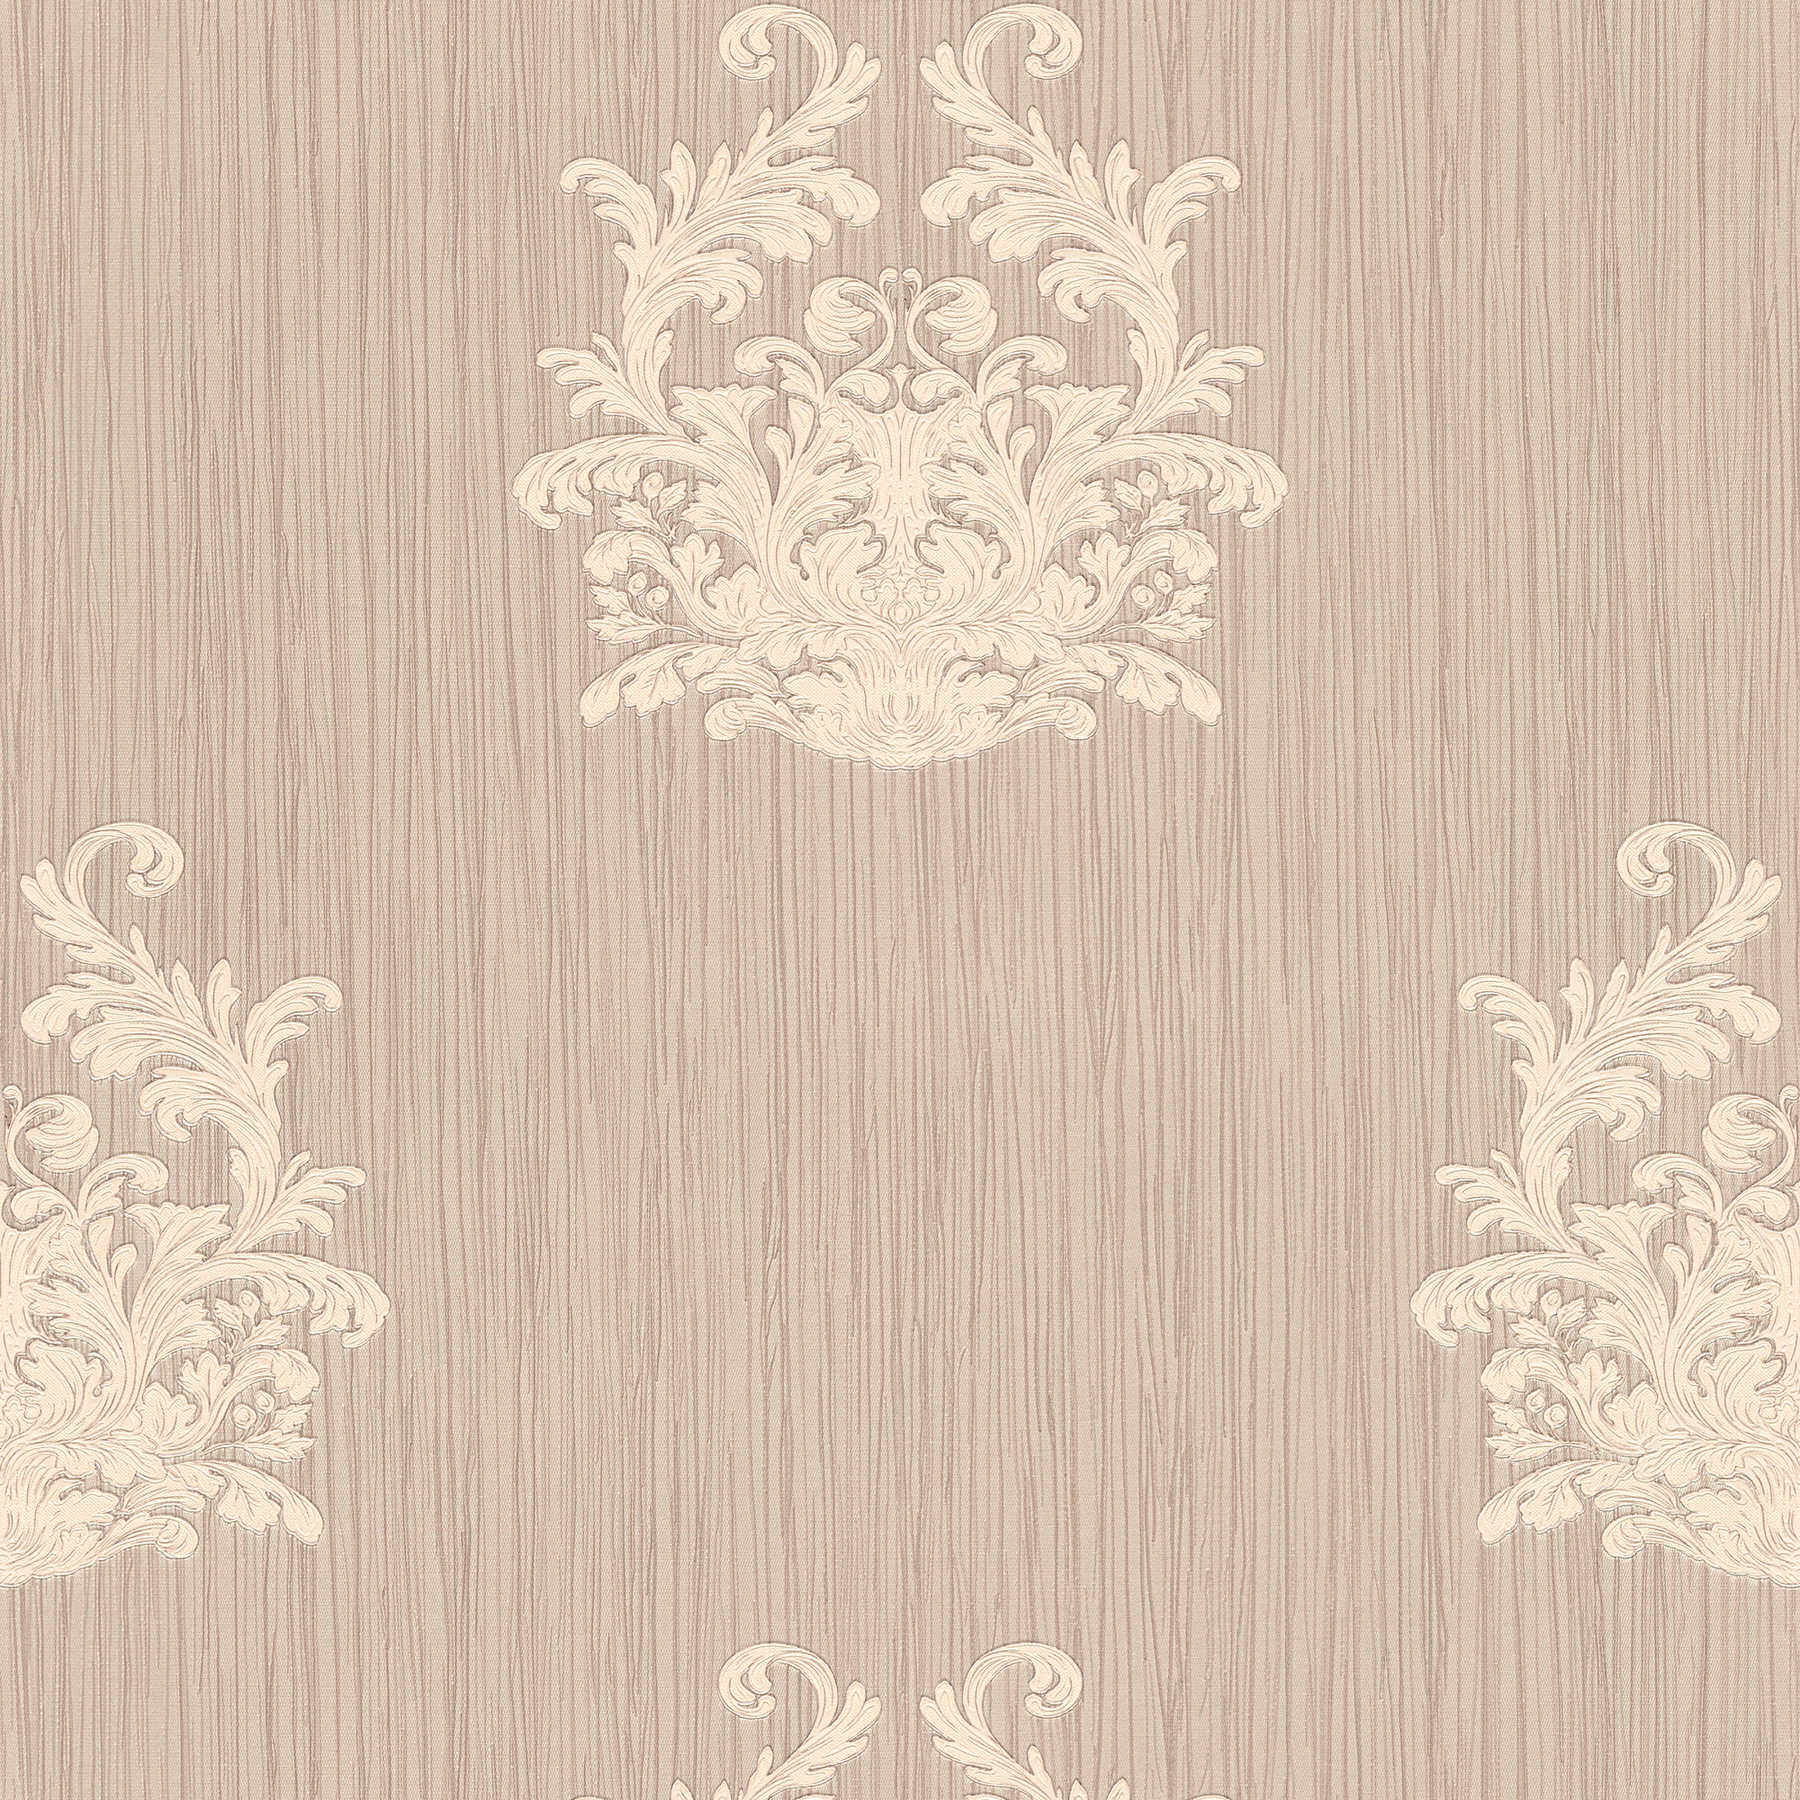         Melange ornament wallpaper with metallic design & texture pattern - Metallic
    